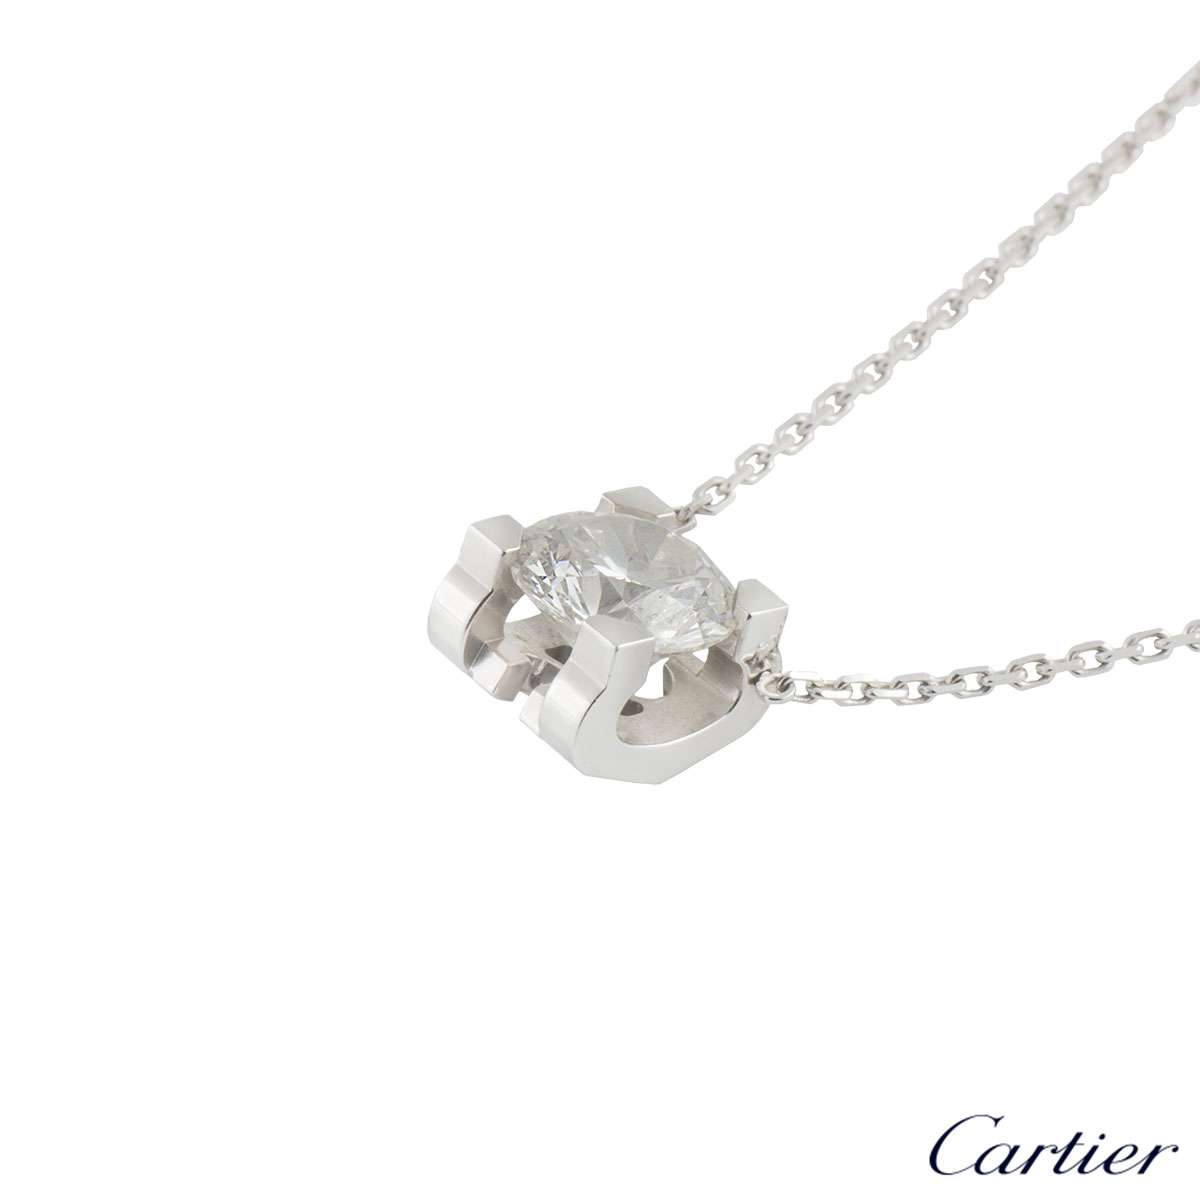 cartier signature c necklace